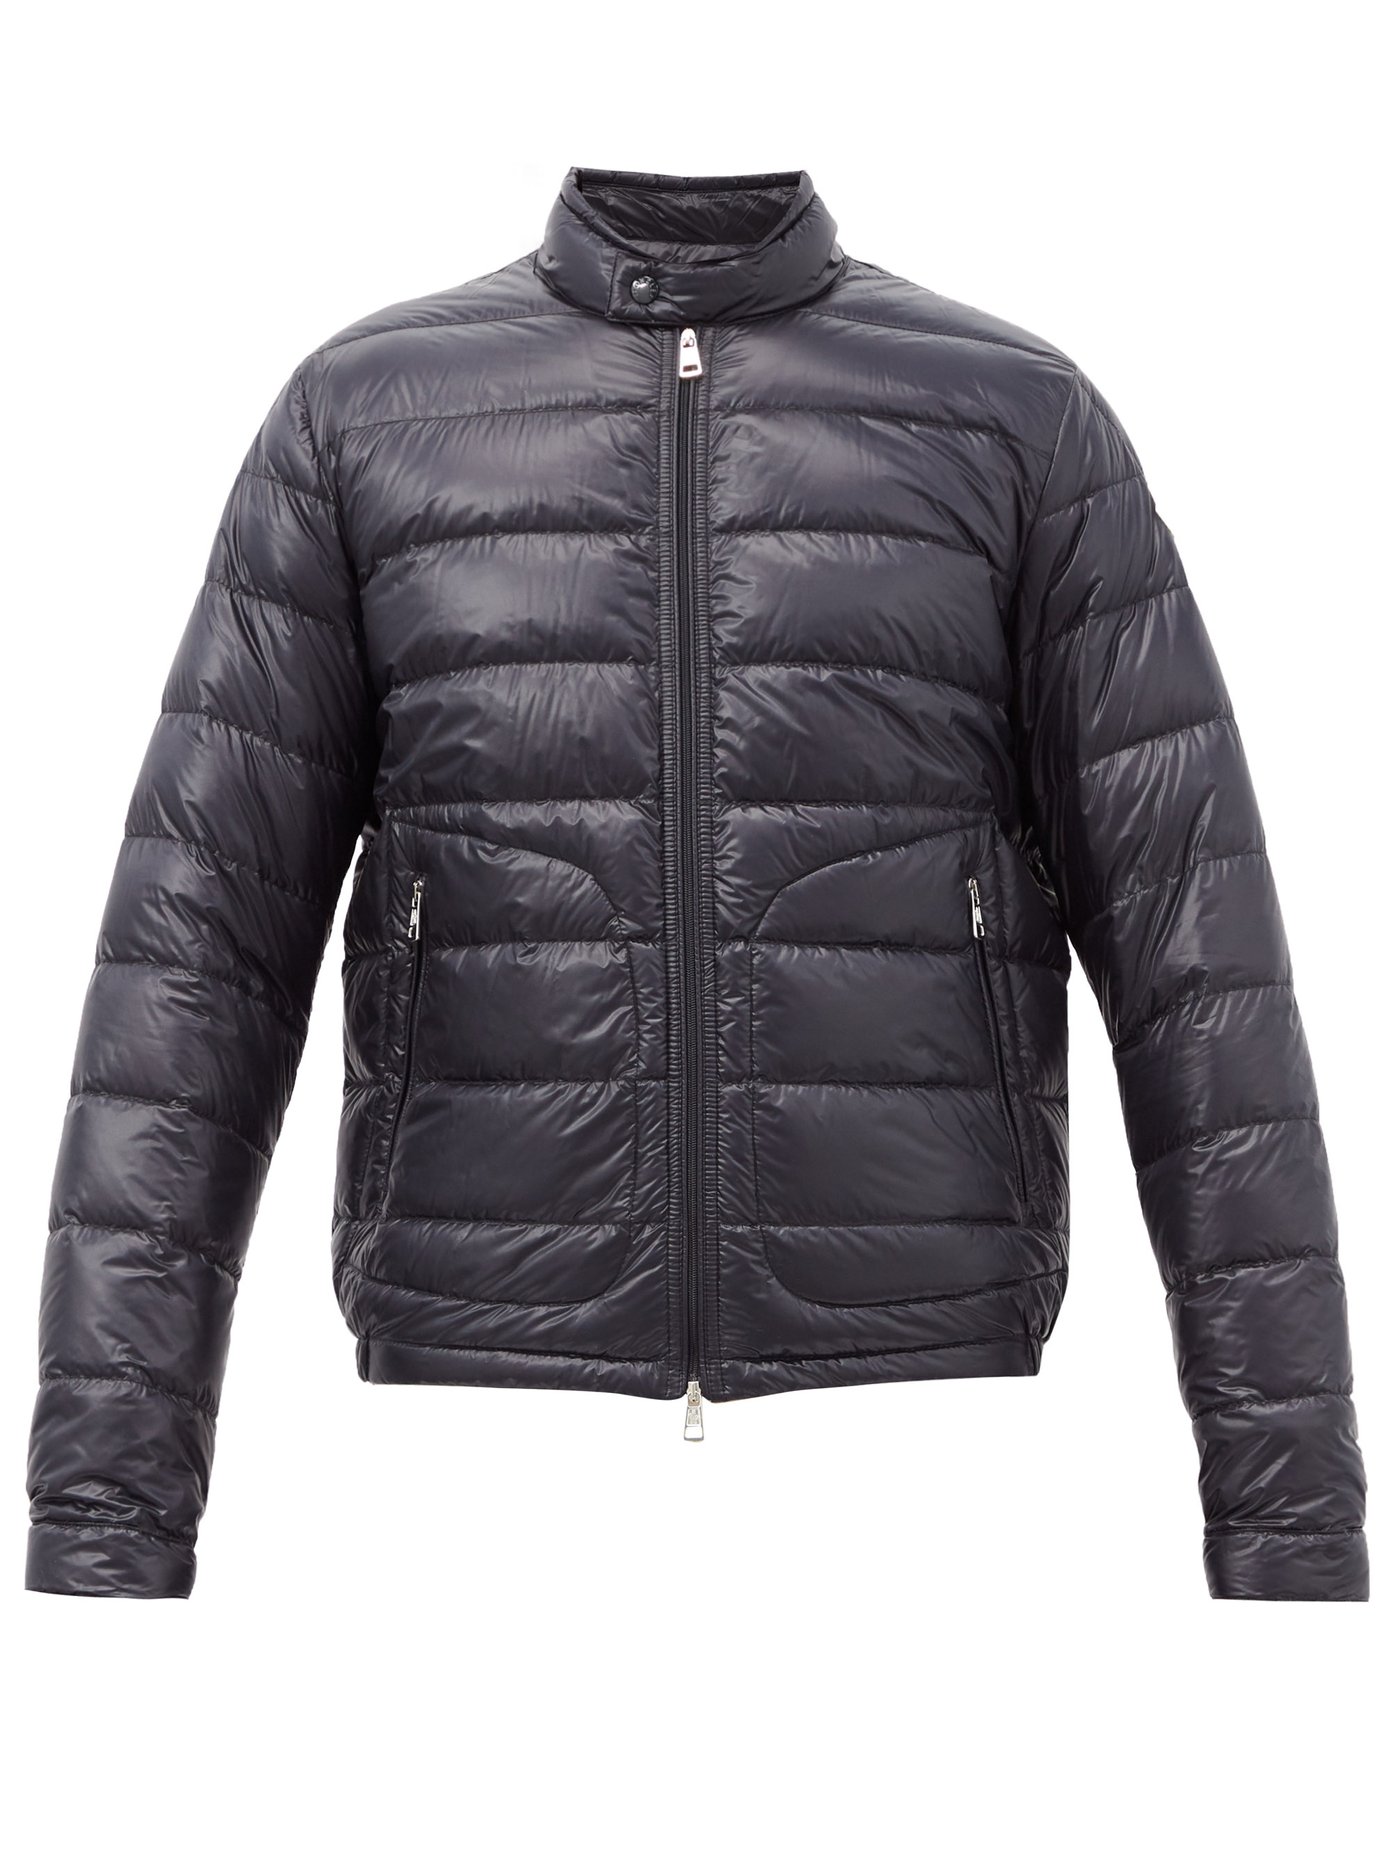 moncler acorus jacket black